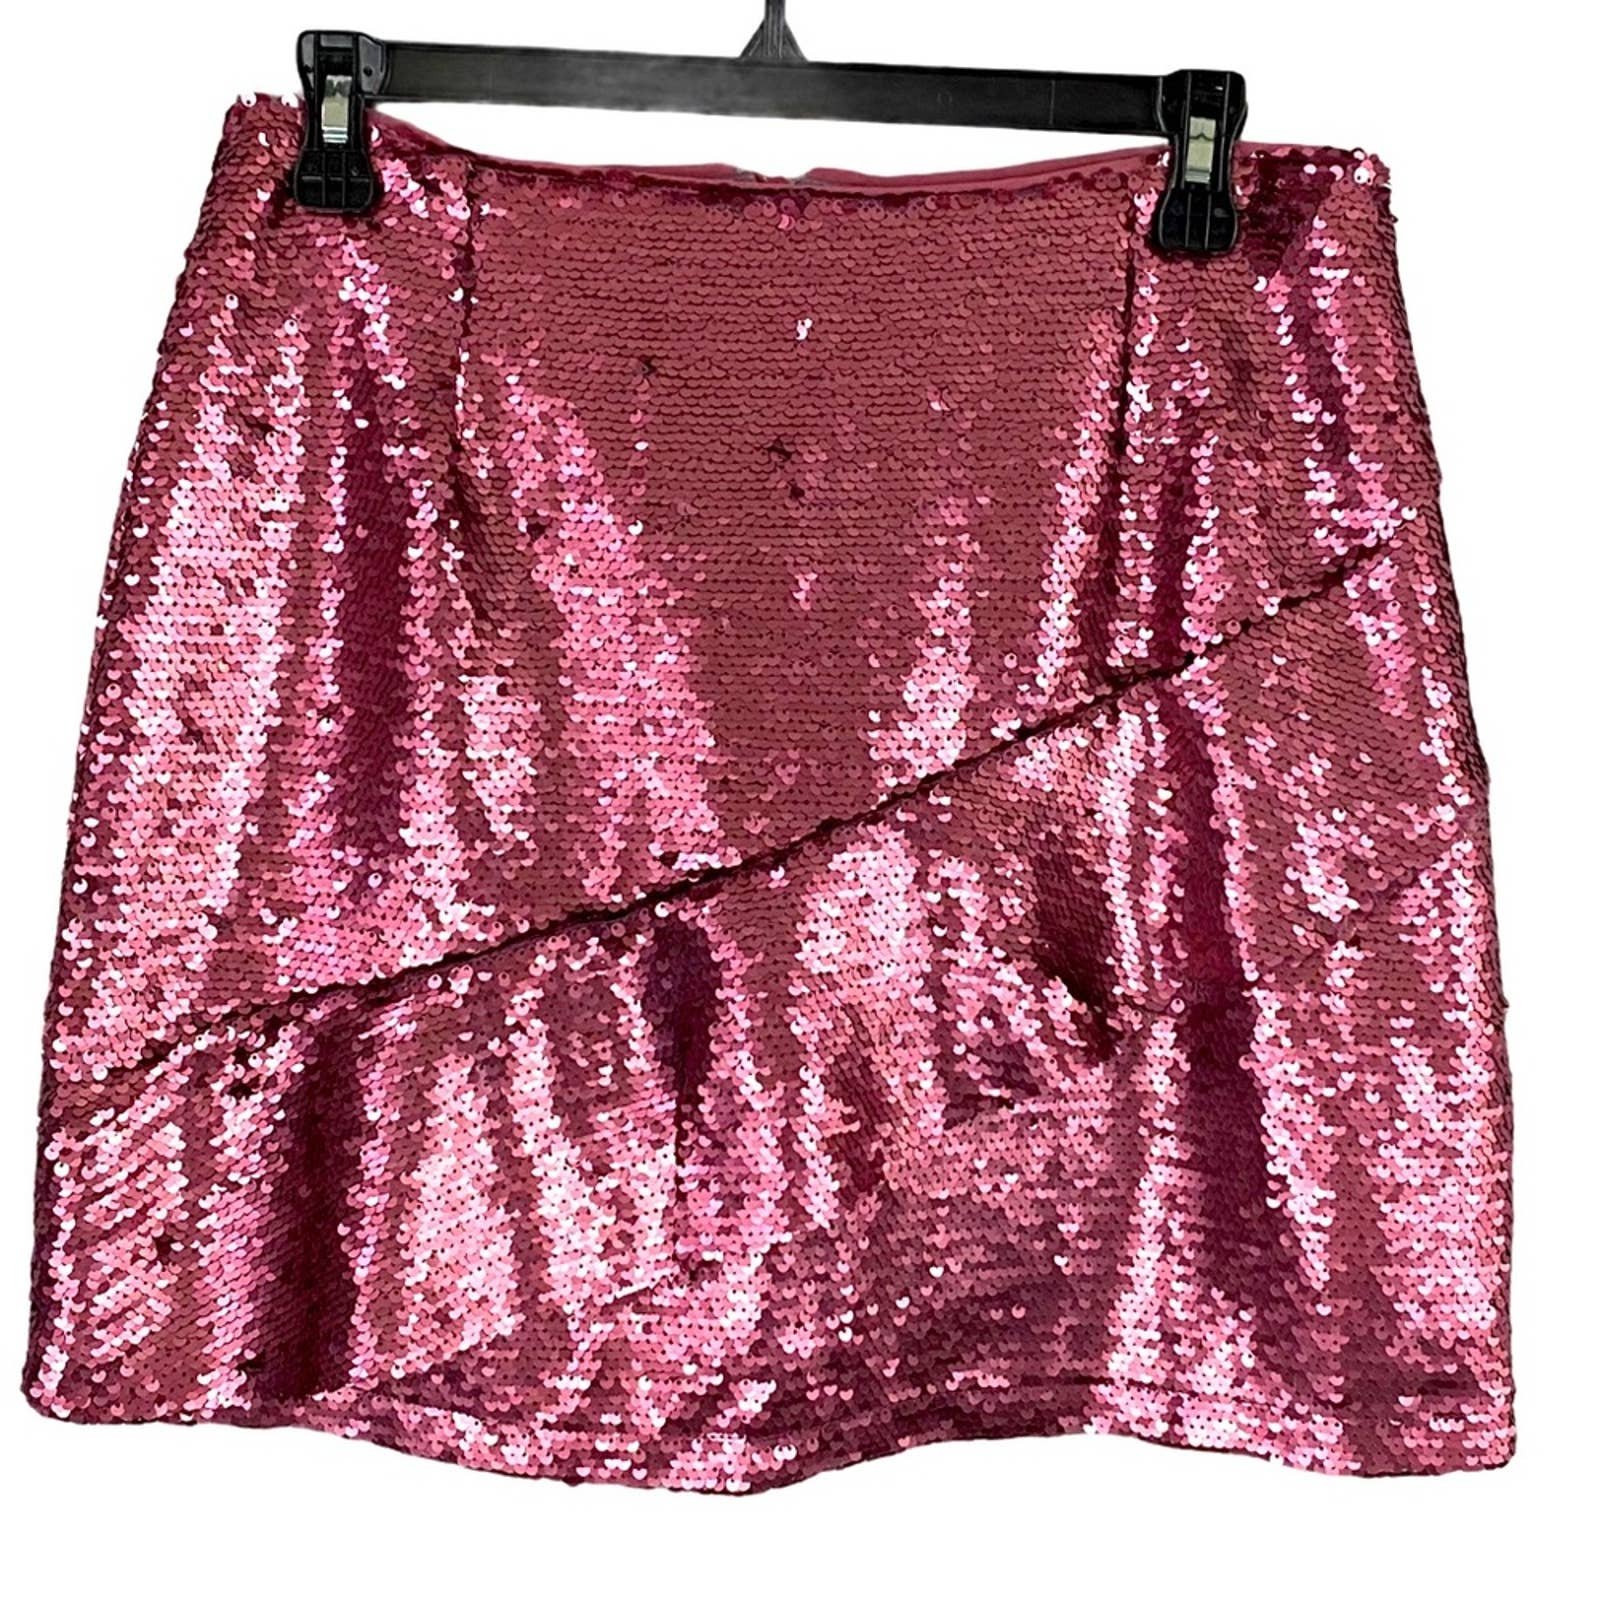 Personality Glamorous Pink Sequined Skirt Medium P35vhKIKF no tax